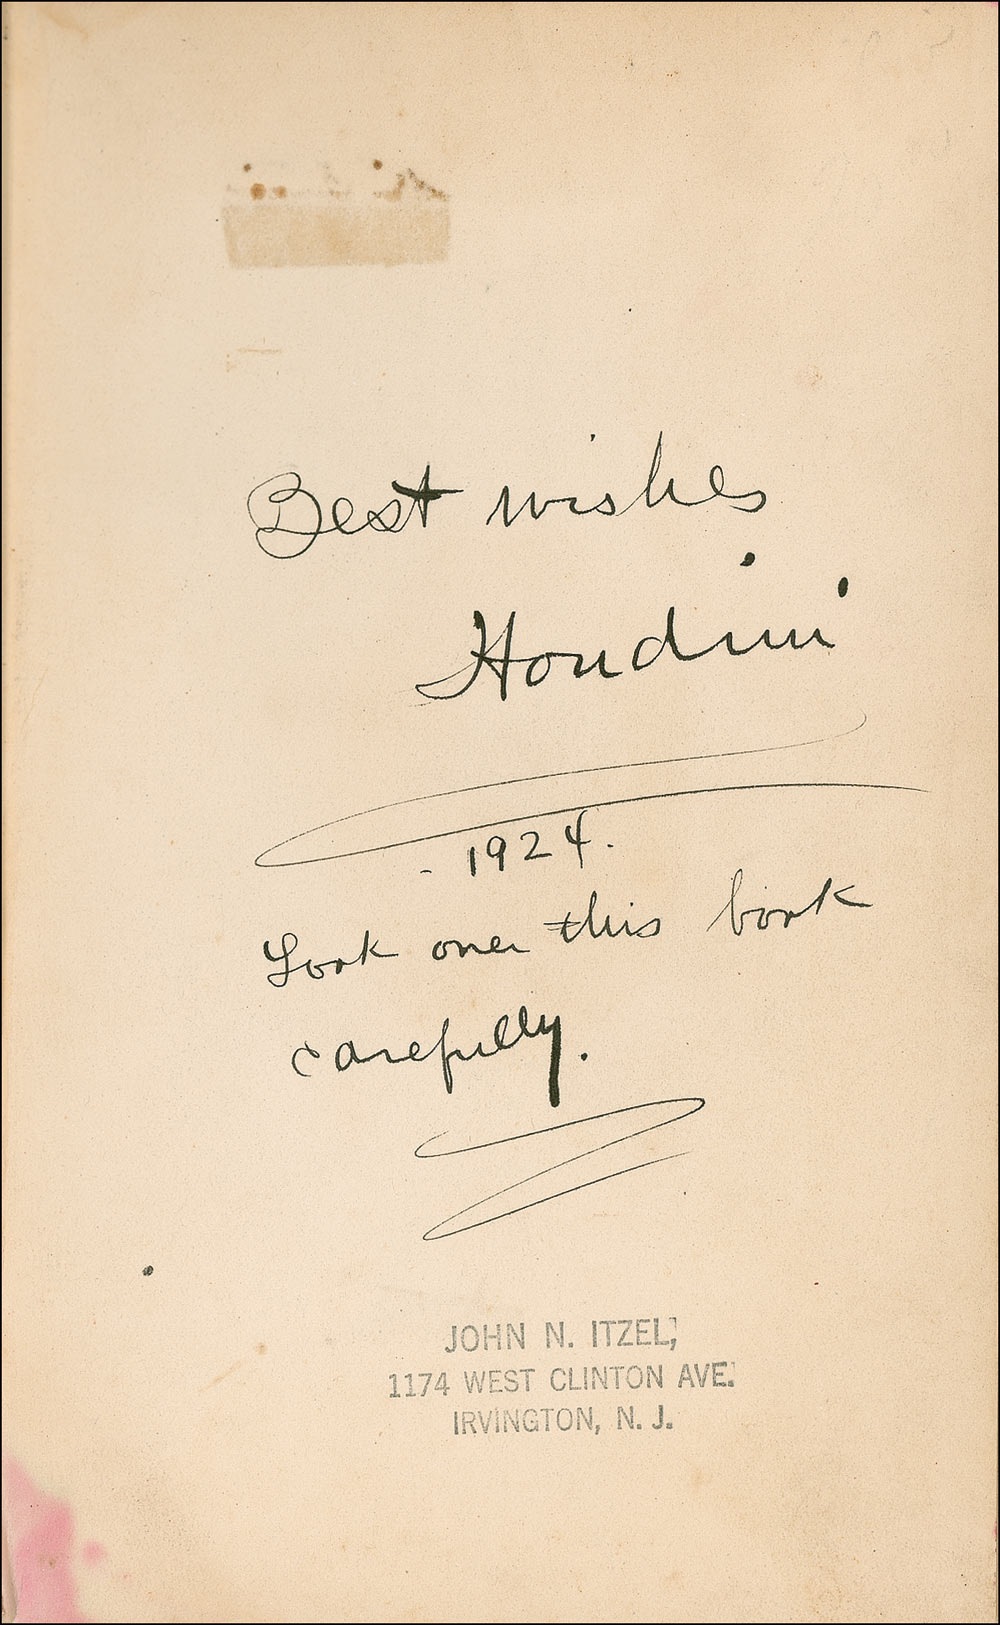 Lot #1001 Harry Houdini